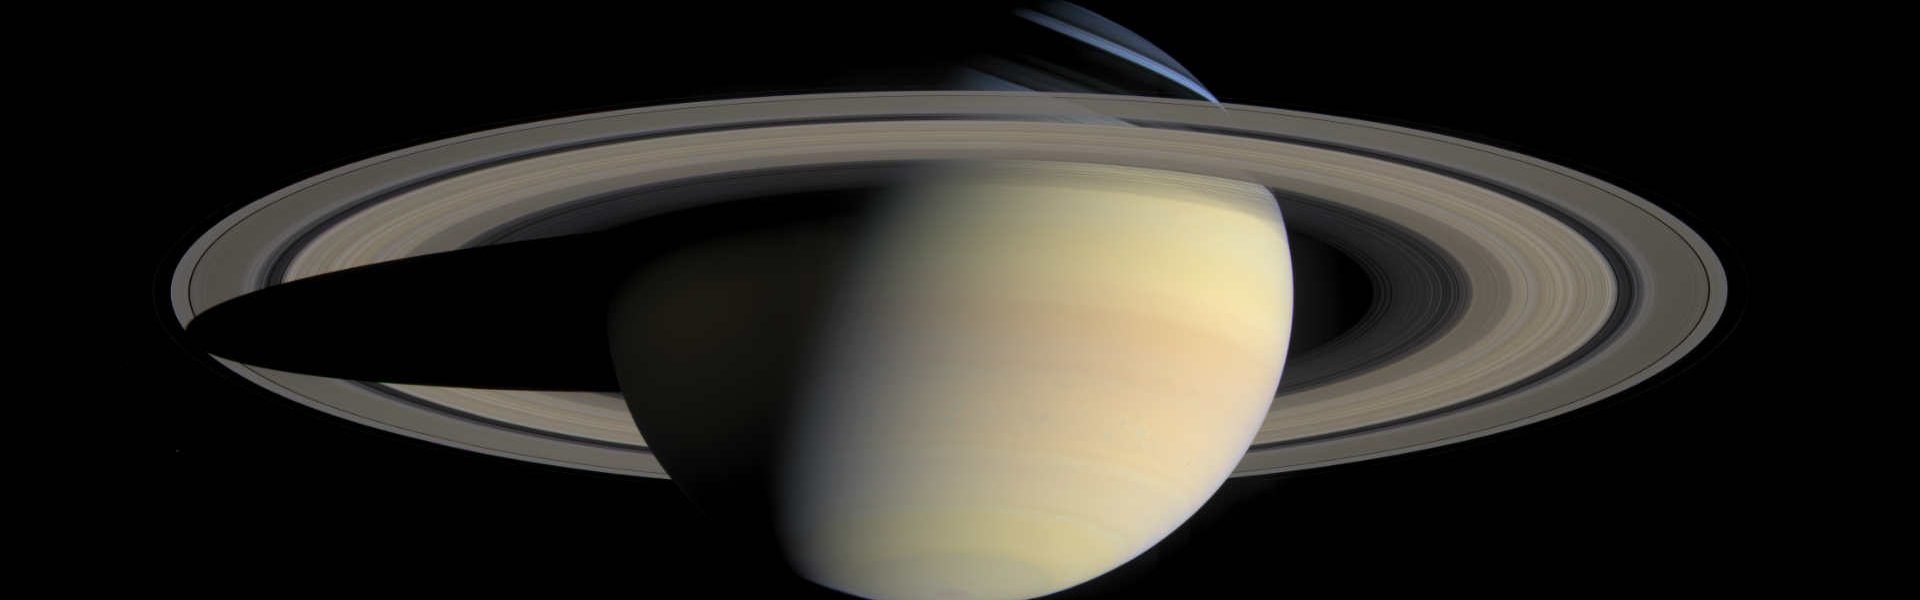 Saturn from Cassini Orbiter 2004 10 06 Zerstreute Reminiszenzen: W. G. Sebald